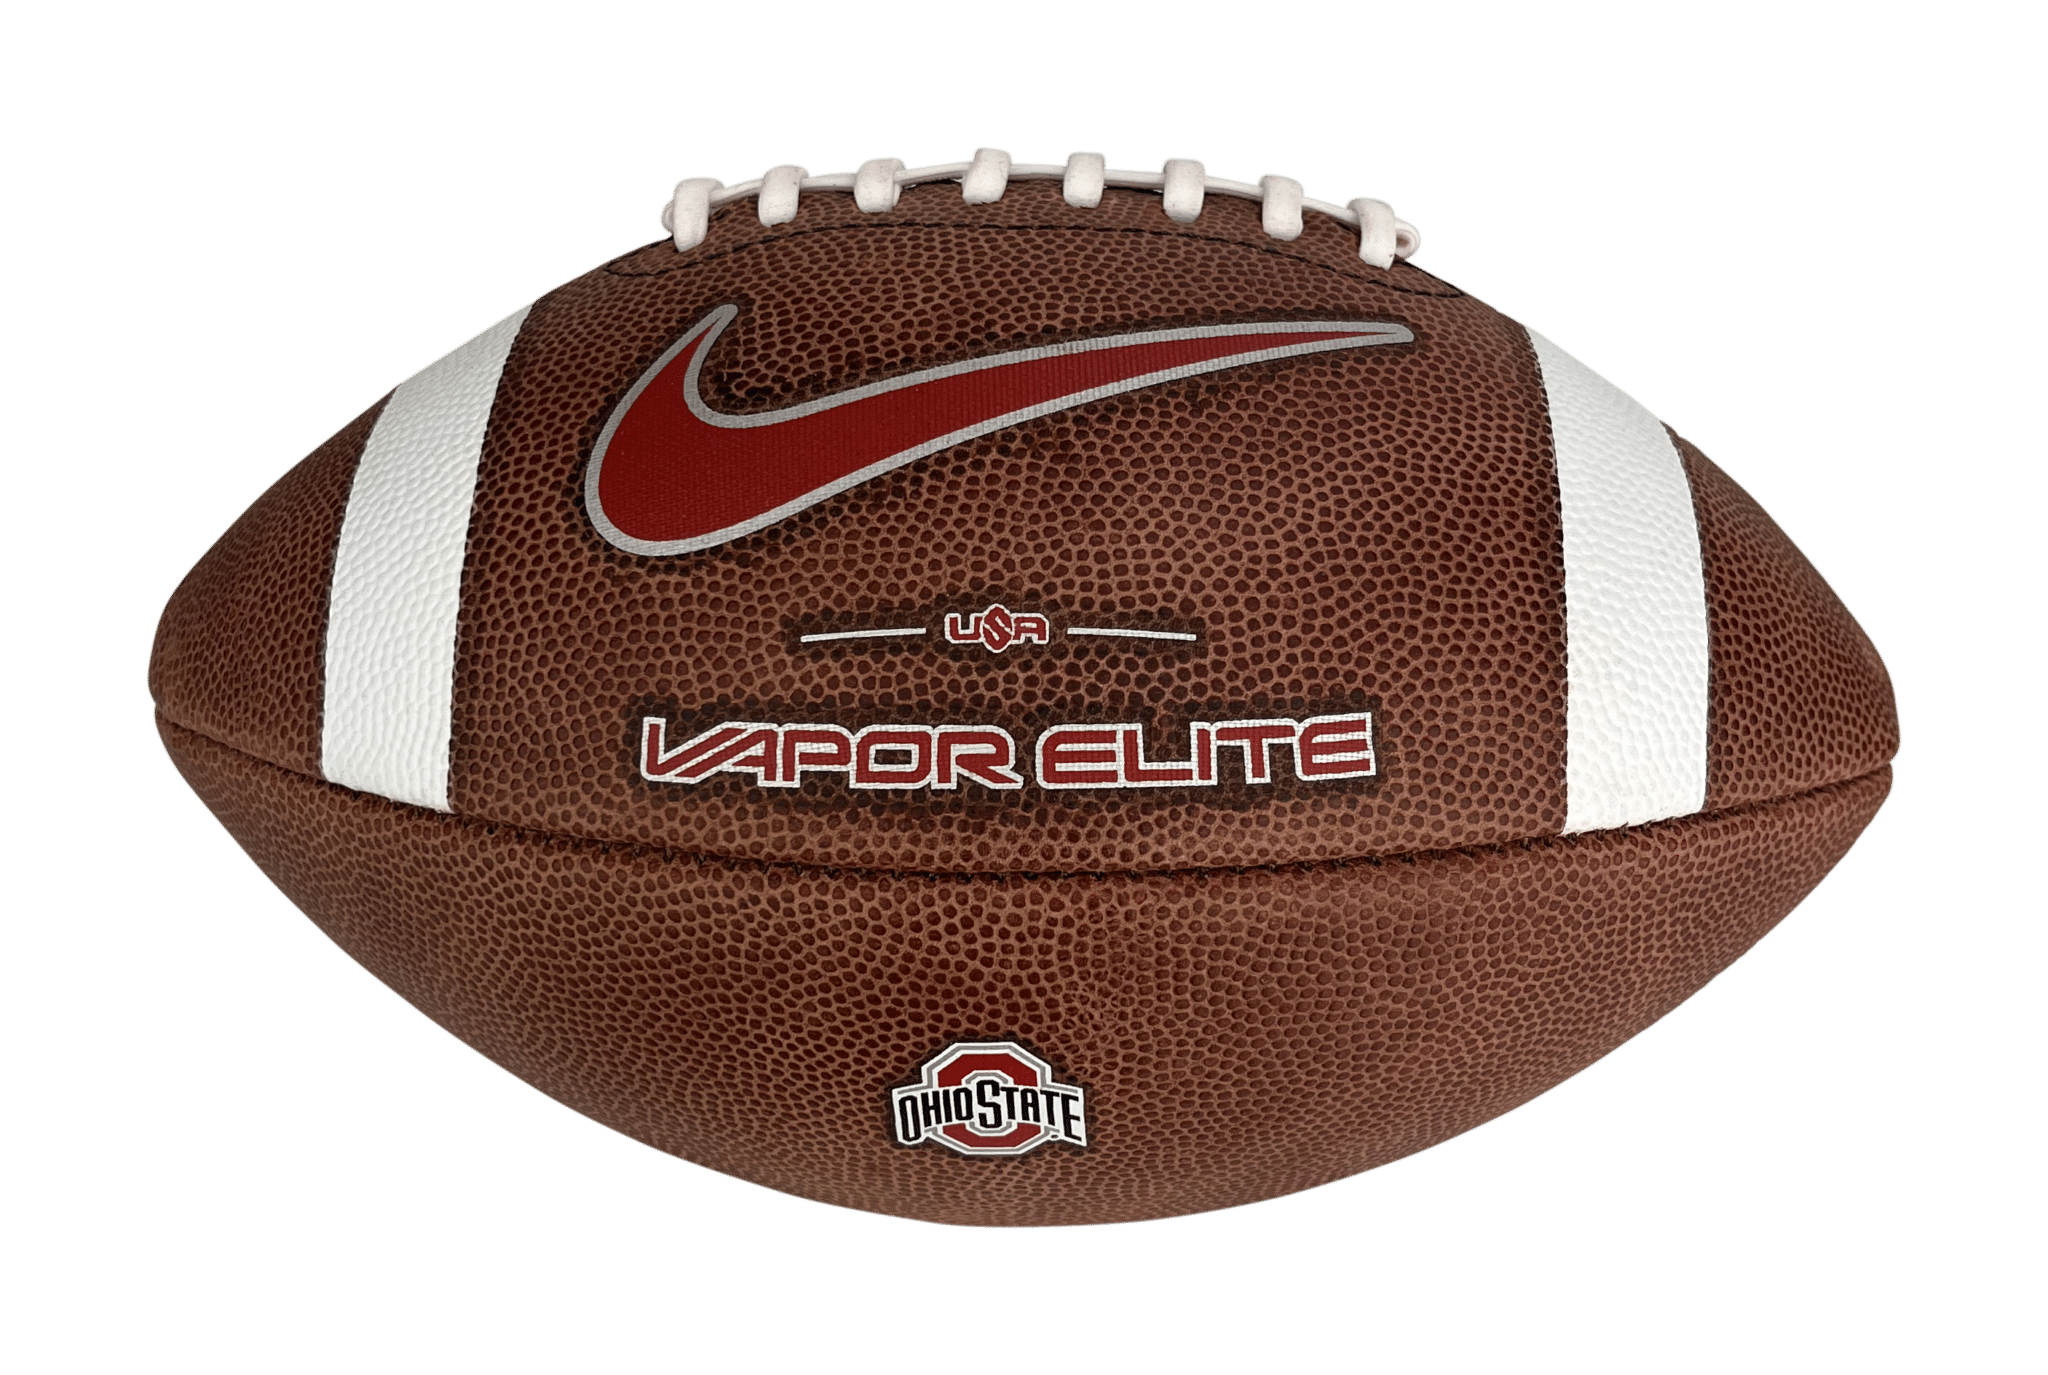 Ohio State Buckeyes  Official Nike Game Football - Big Game USA